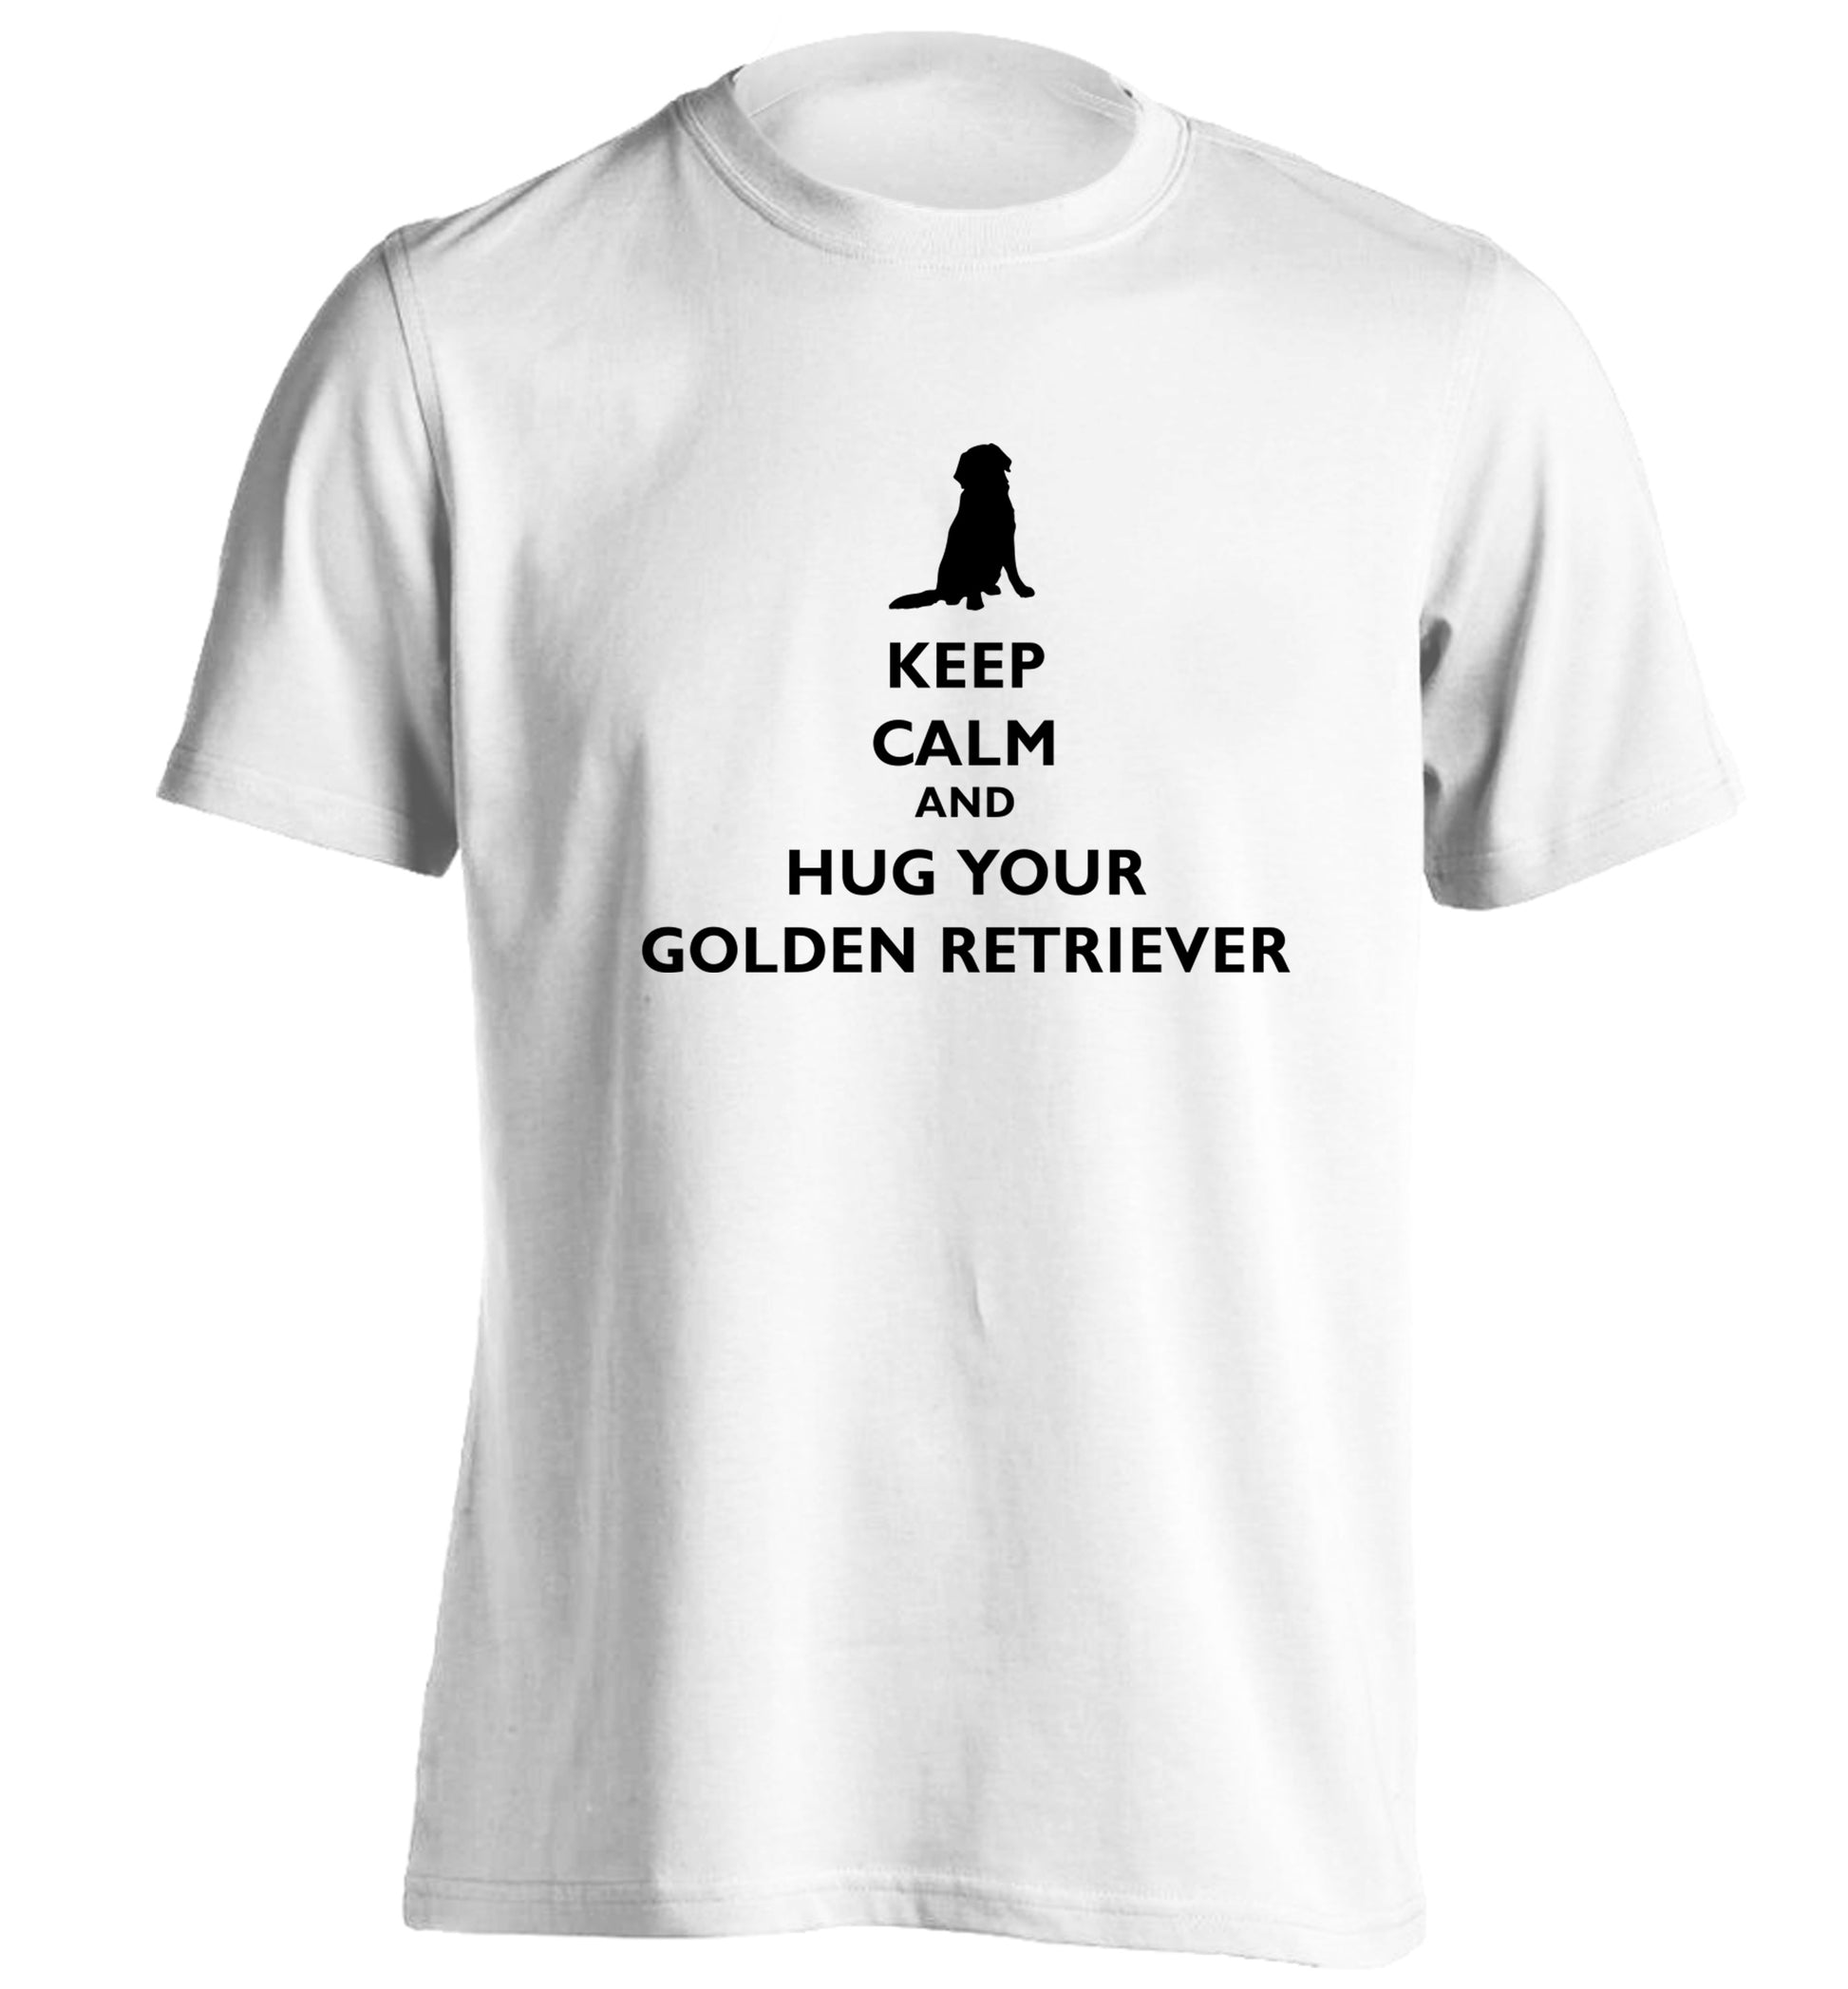 Keep calm and hug your golden retriever adults unisex white Tshirt 2XL